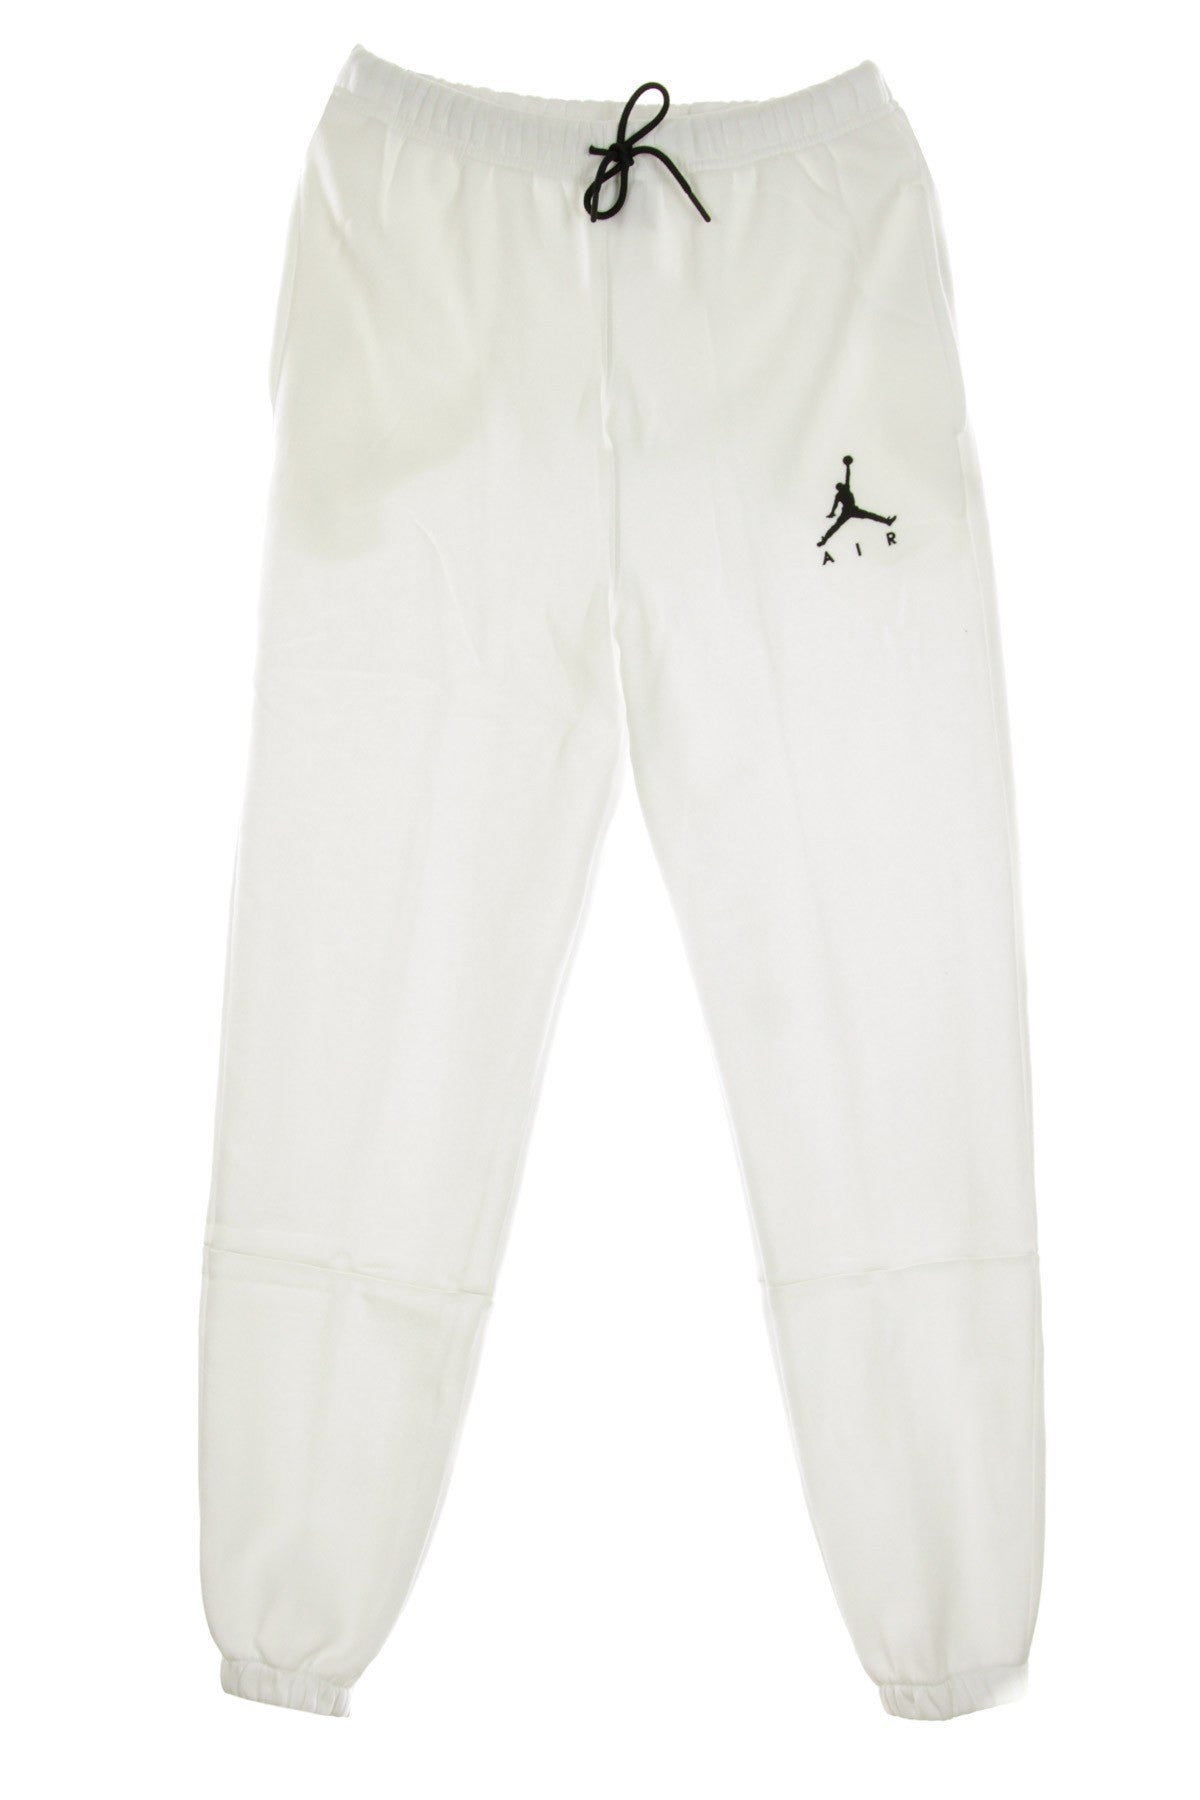 Pantalone Tuta Felpato Uomo Jumpman Air Fleece White/white/black